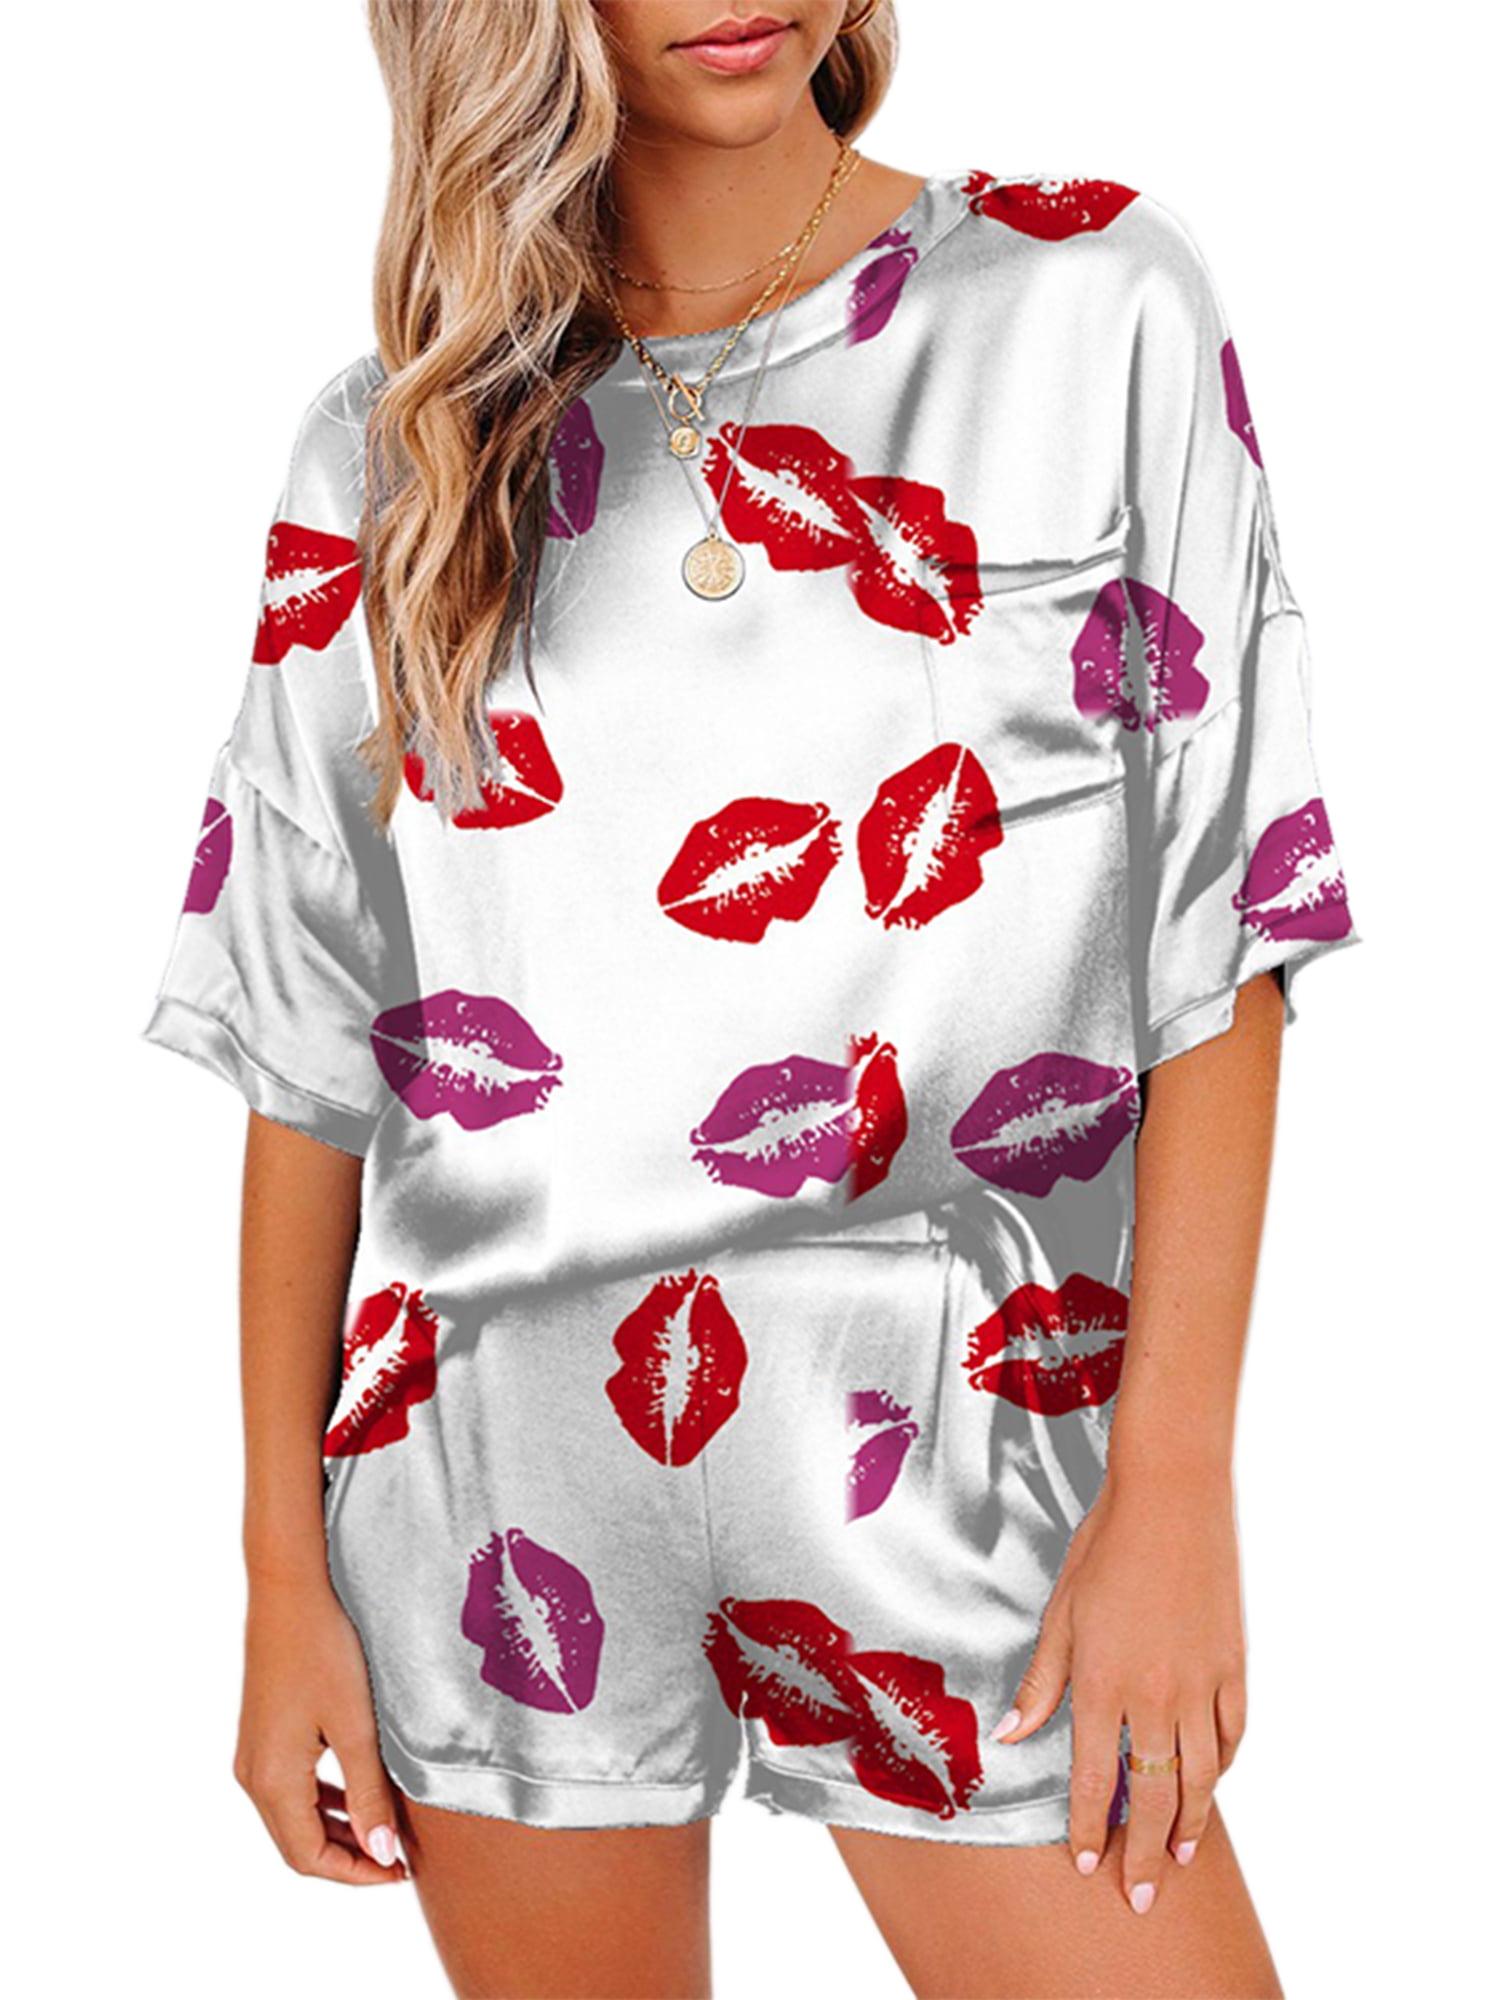 Womens Floral Pyjamas Sleepwear Set Short Sleeve T-Shirt Tops Shorts PJs Pajamas